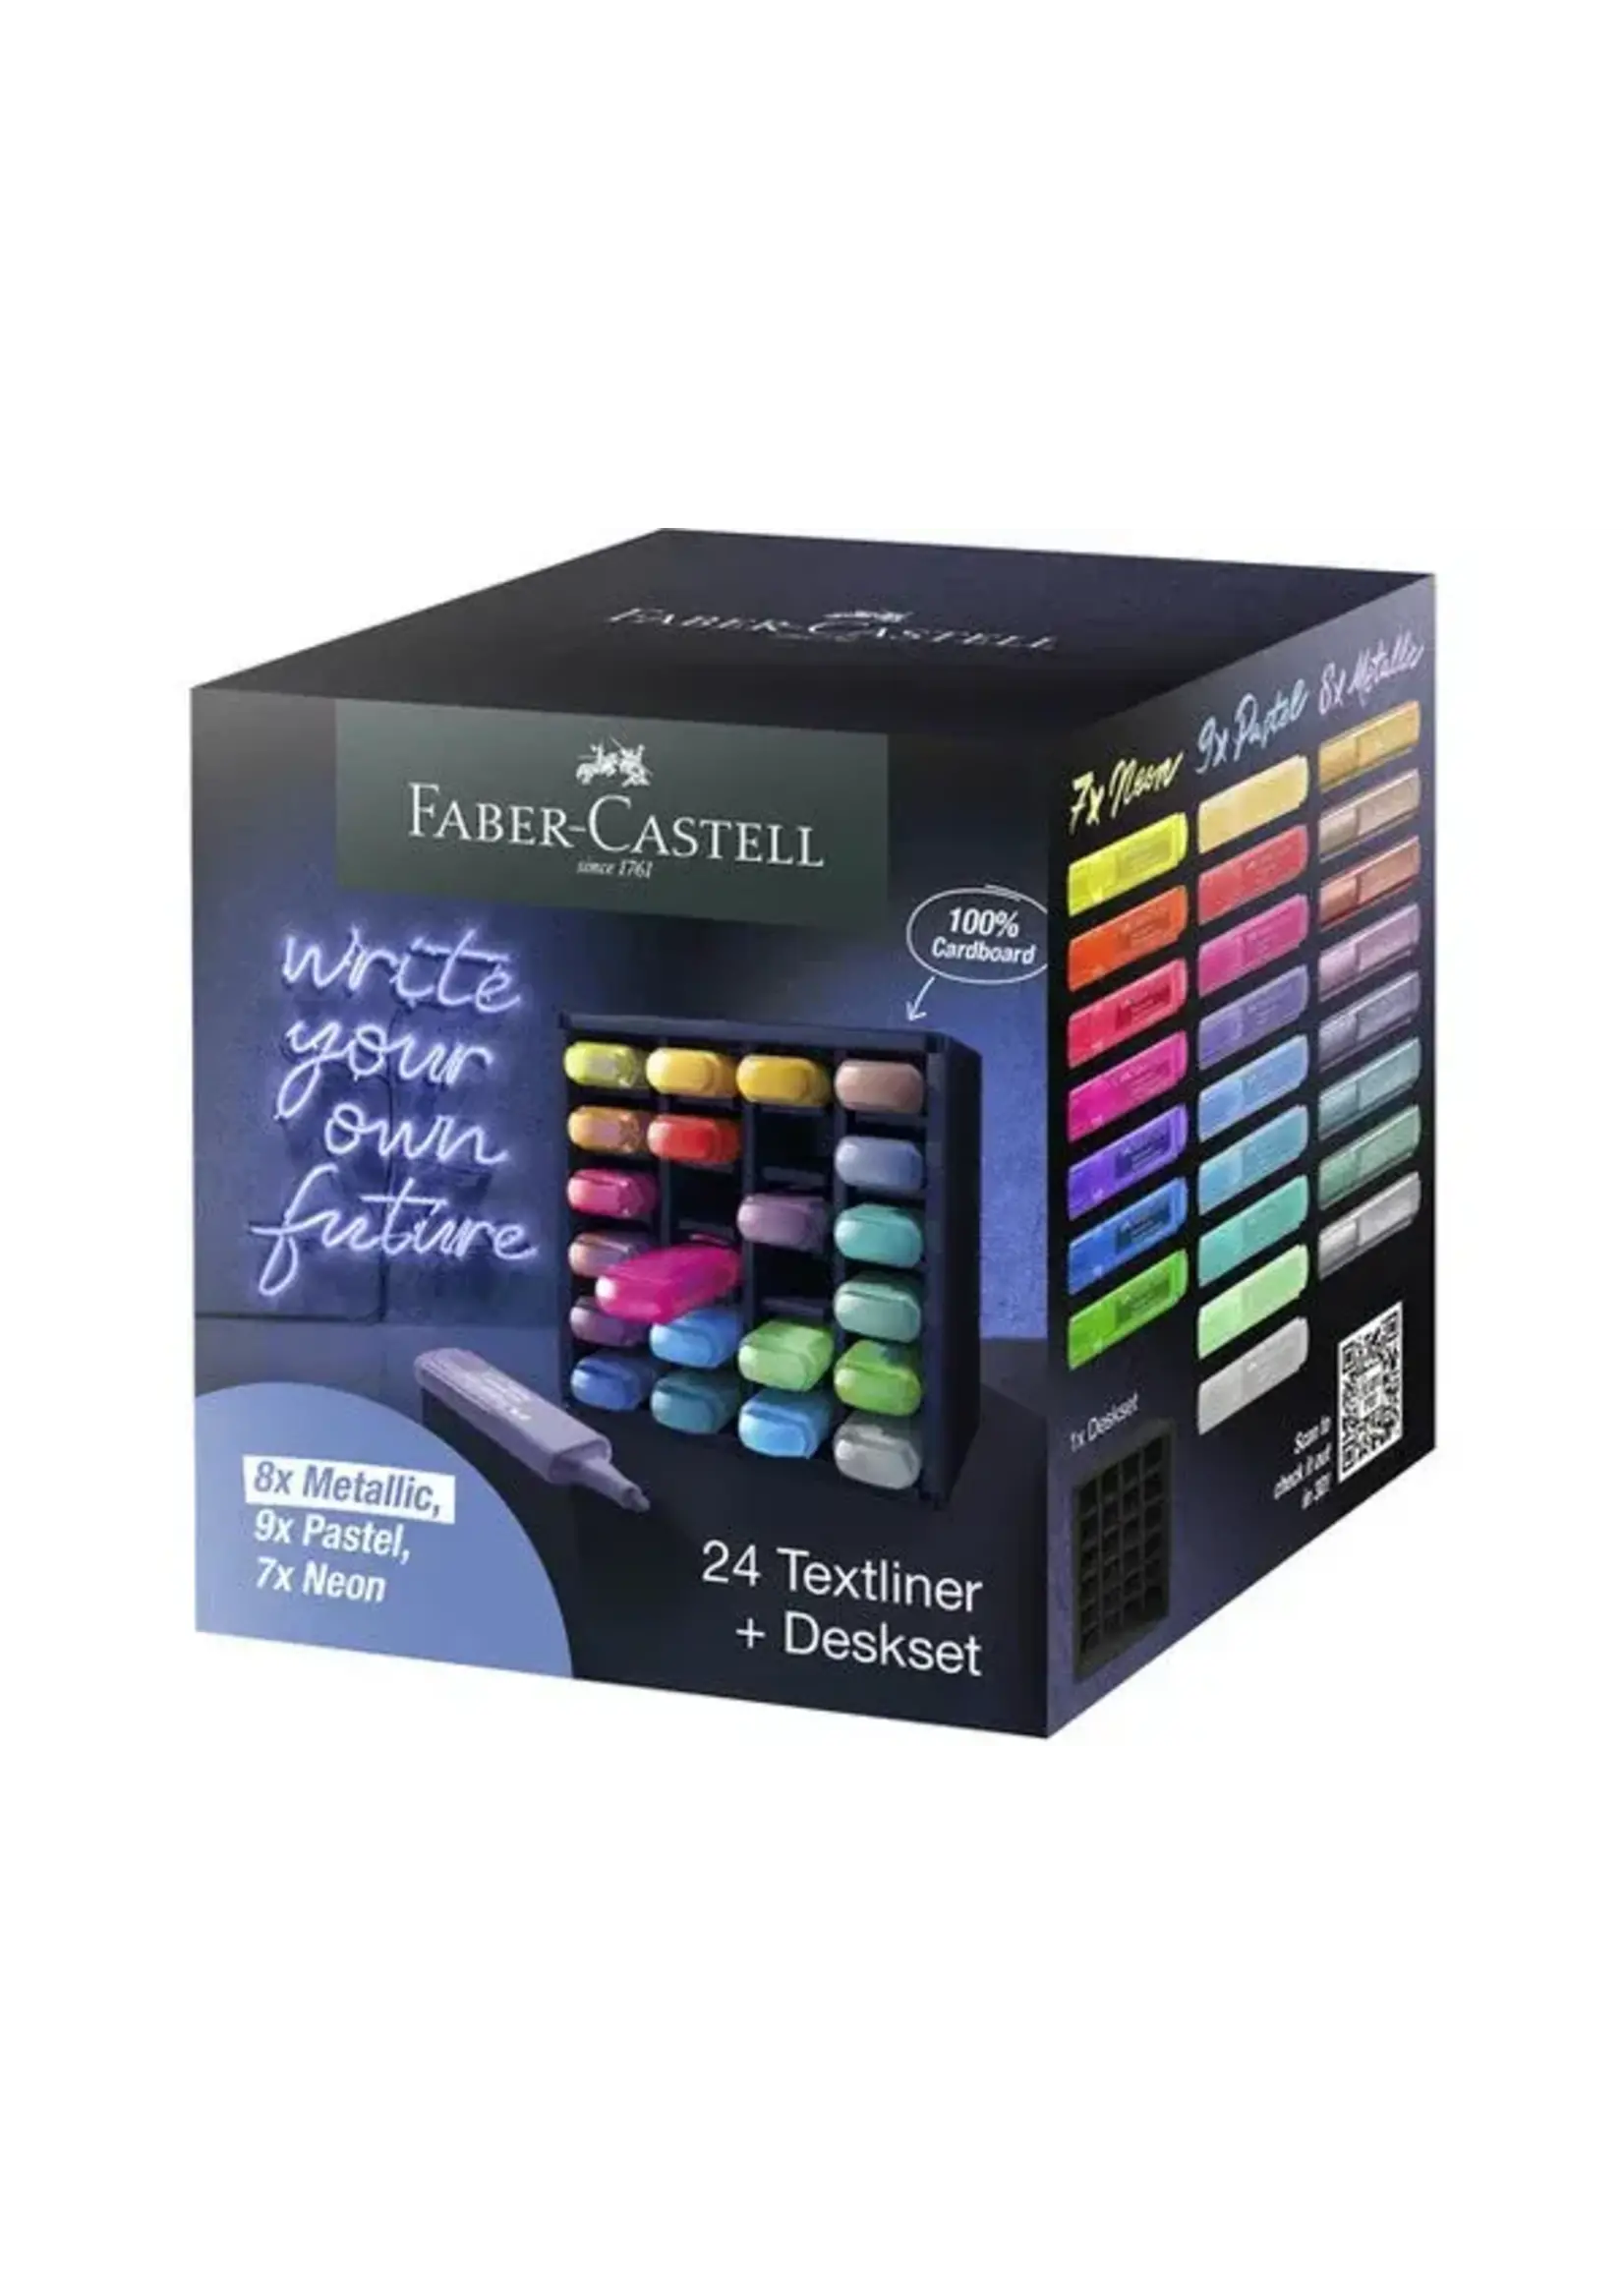 Faber Castell Textliner Deskset Metallic/Pastel/Neon (24pcs) (FC-254602)